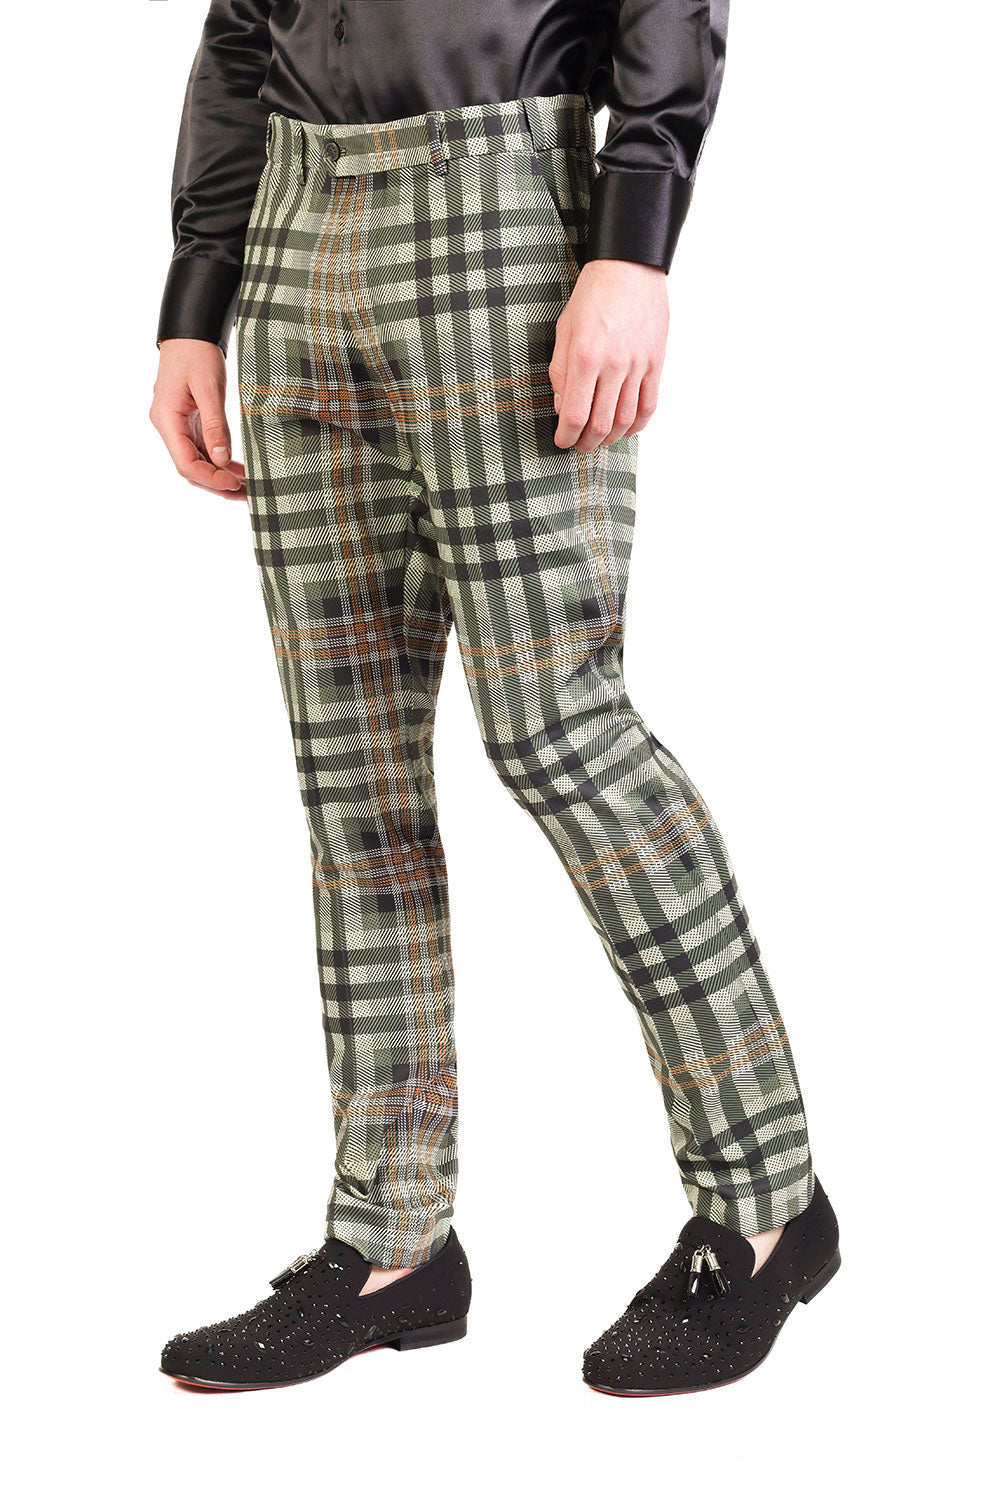 Barabas Men's Luxury Plaid Checkered Chino Dress Slim Pants CP201